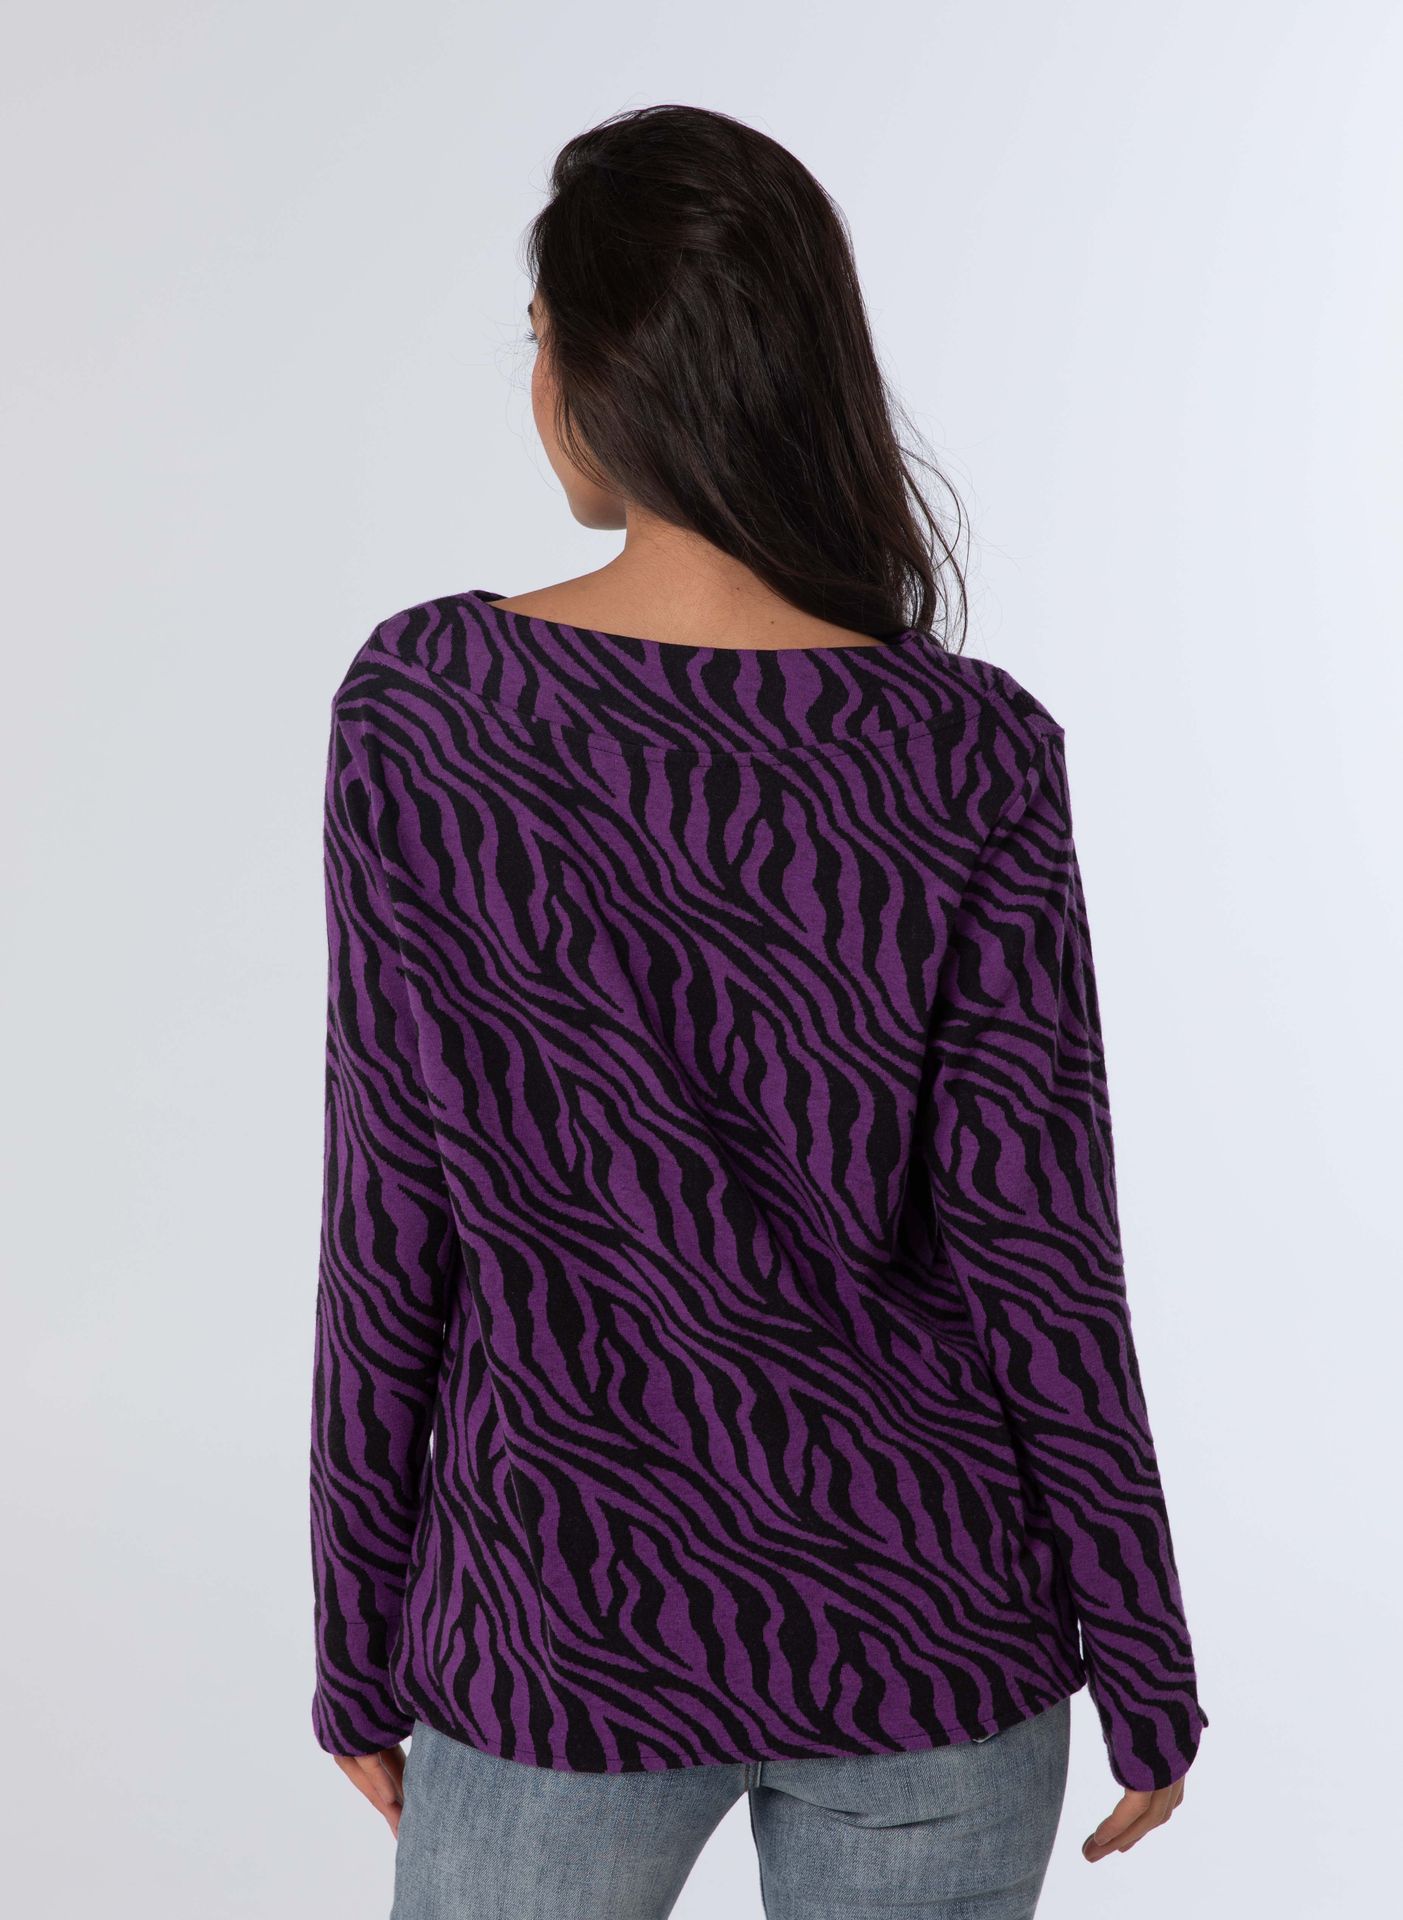 Norah Trui paars zwart  purple/black 212918-830